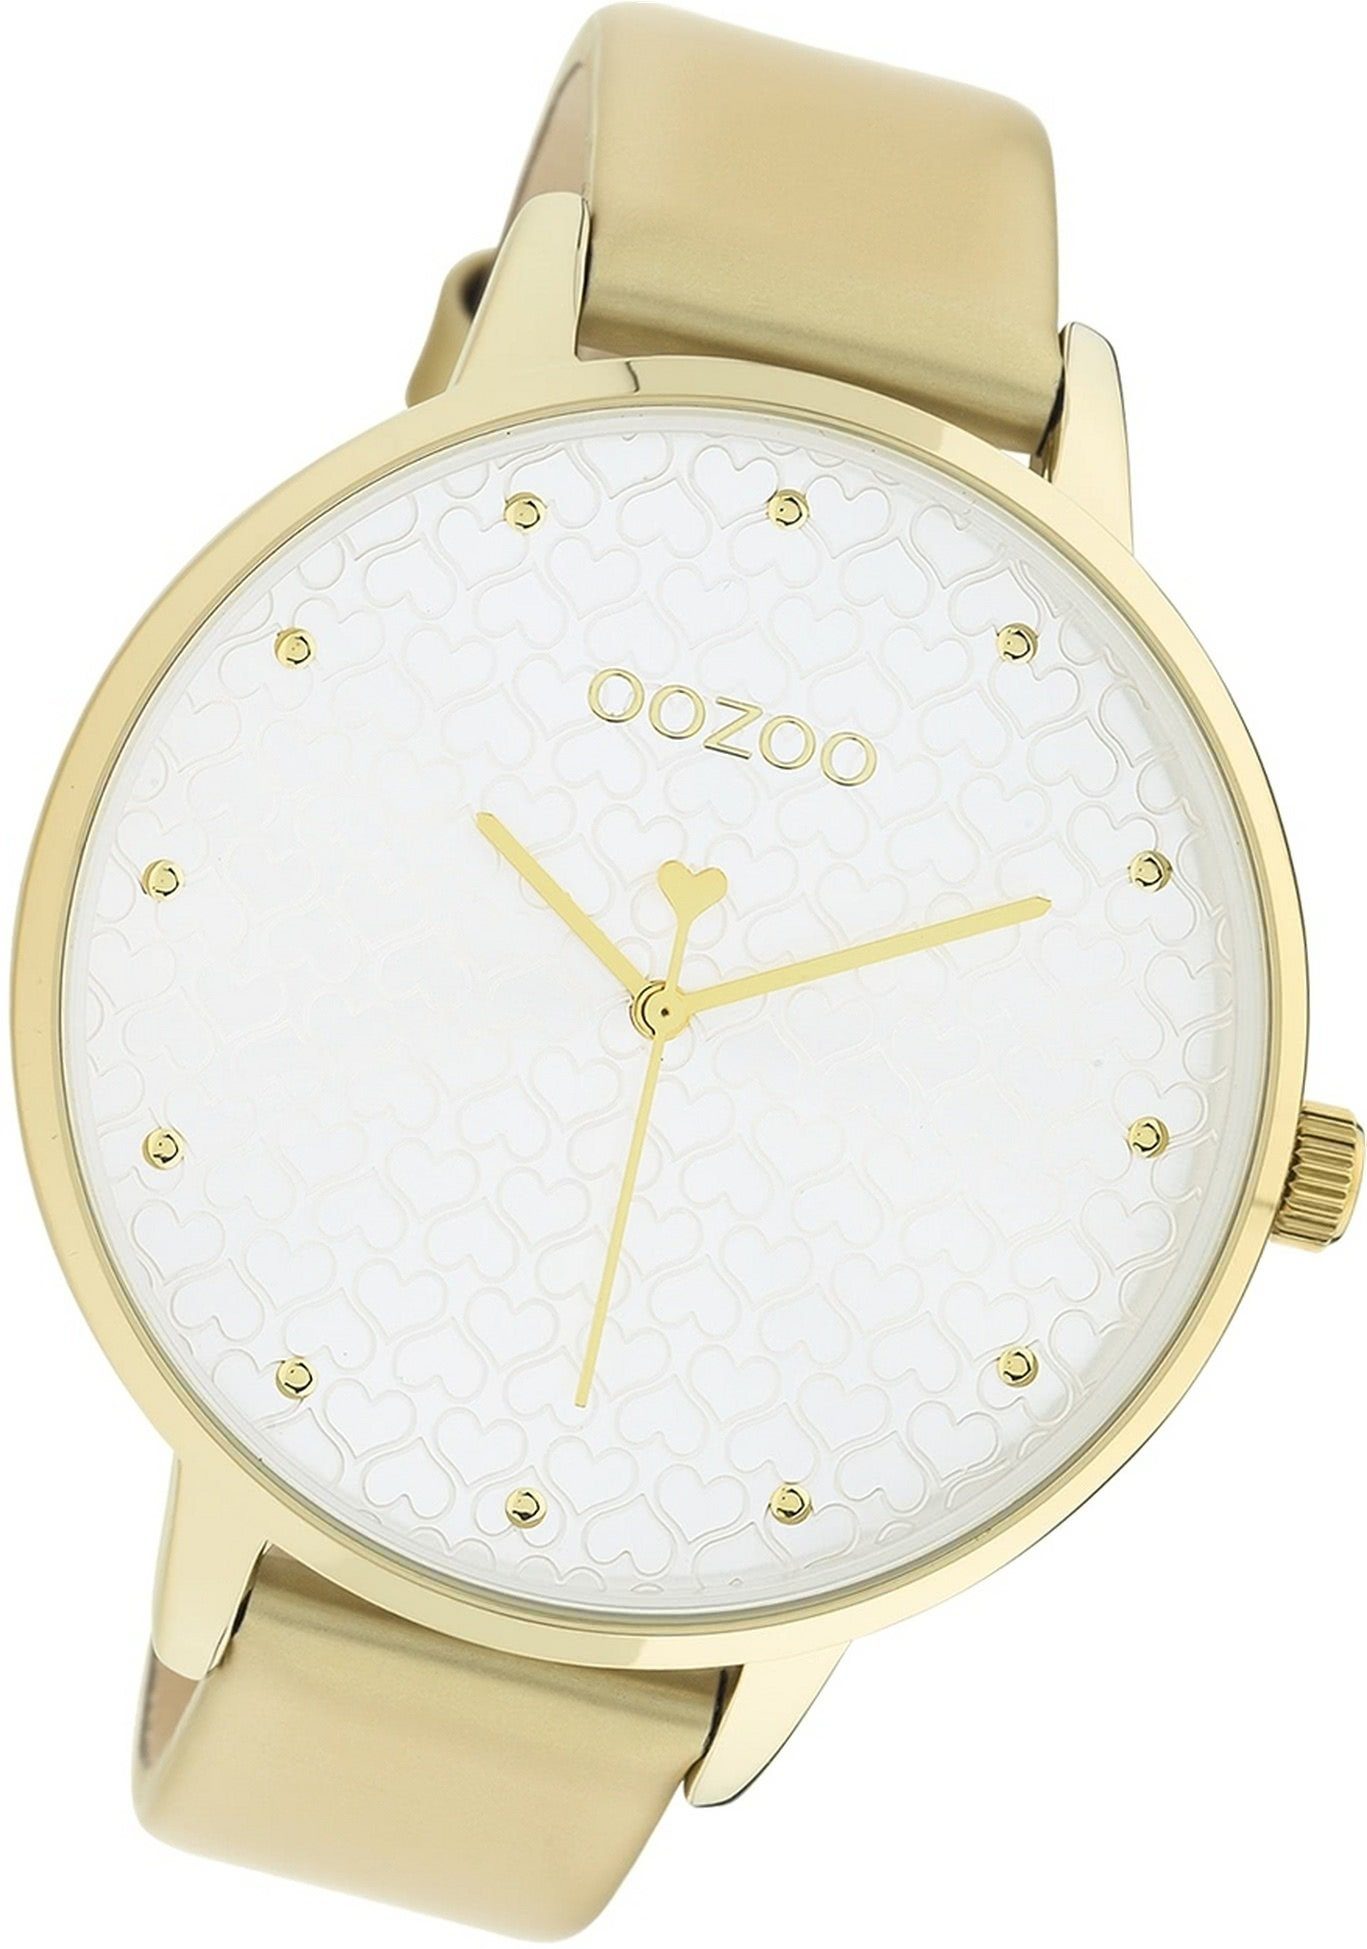 Gehäuse, OOZOO rundes Damenuhr Timepieces, Oozoo Quarzuhr gold, groß (ca. Lederarmband Armbanduhr Damen extra 48mm)